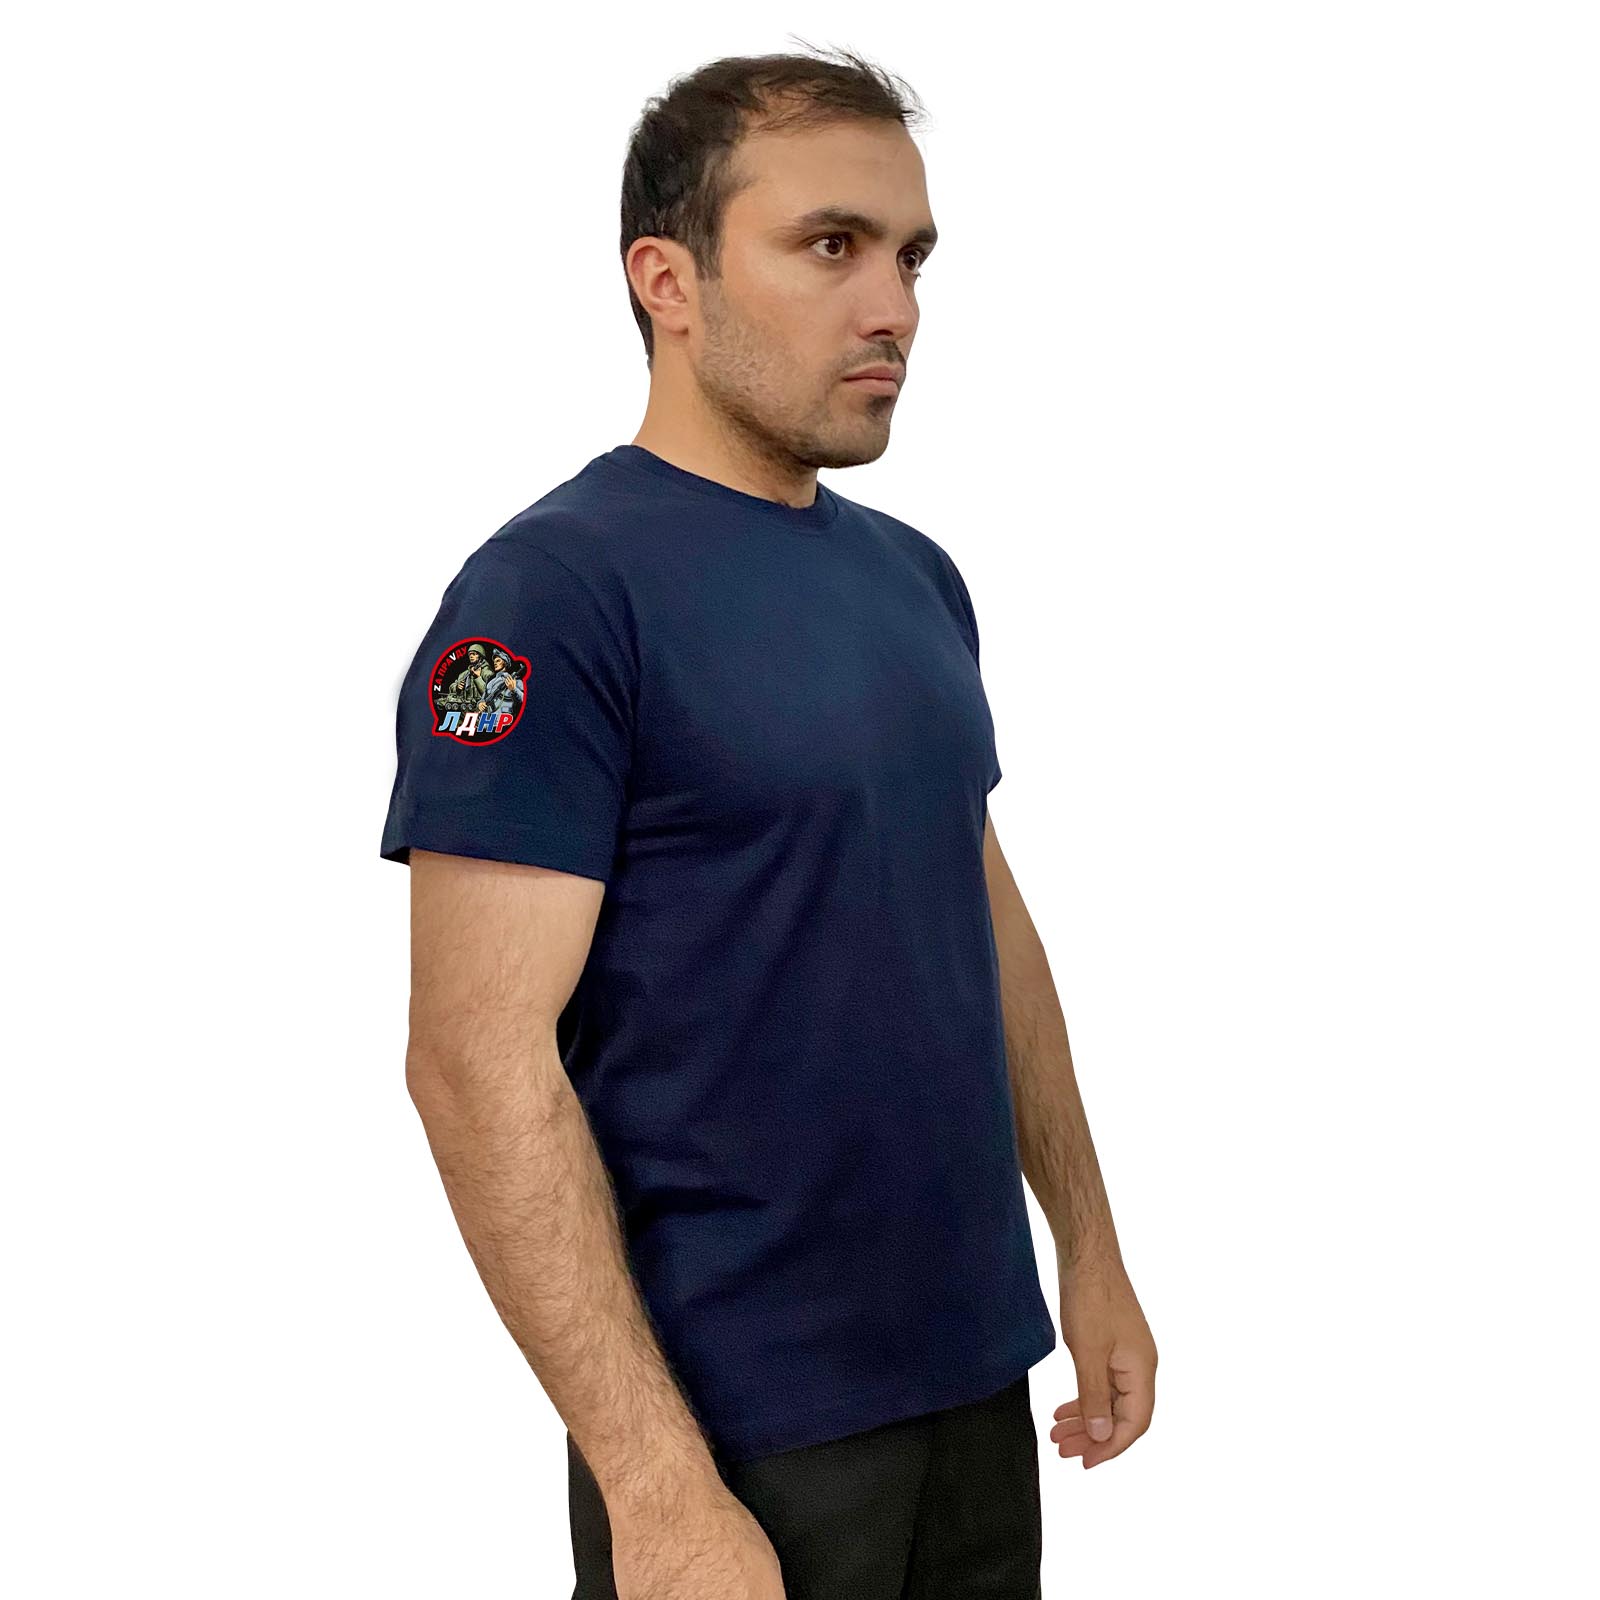 Тёмно-синяя футболка с термотрансфером ЛДНР "Zа праVду" на рукаве